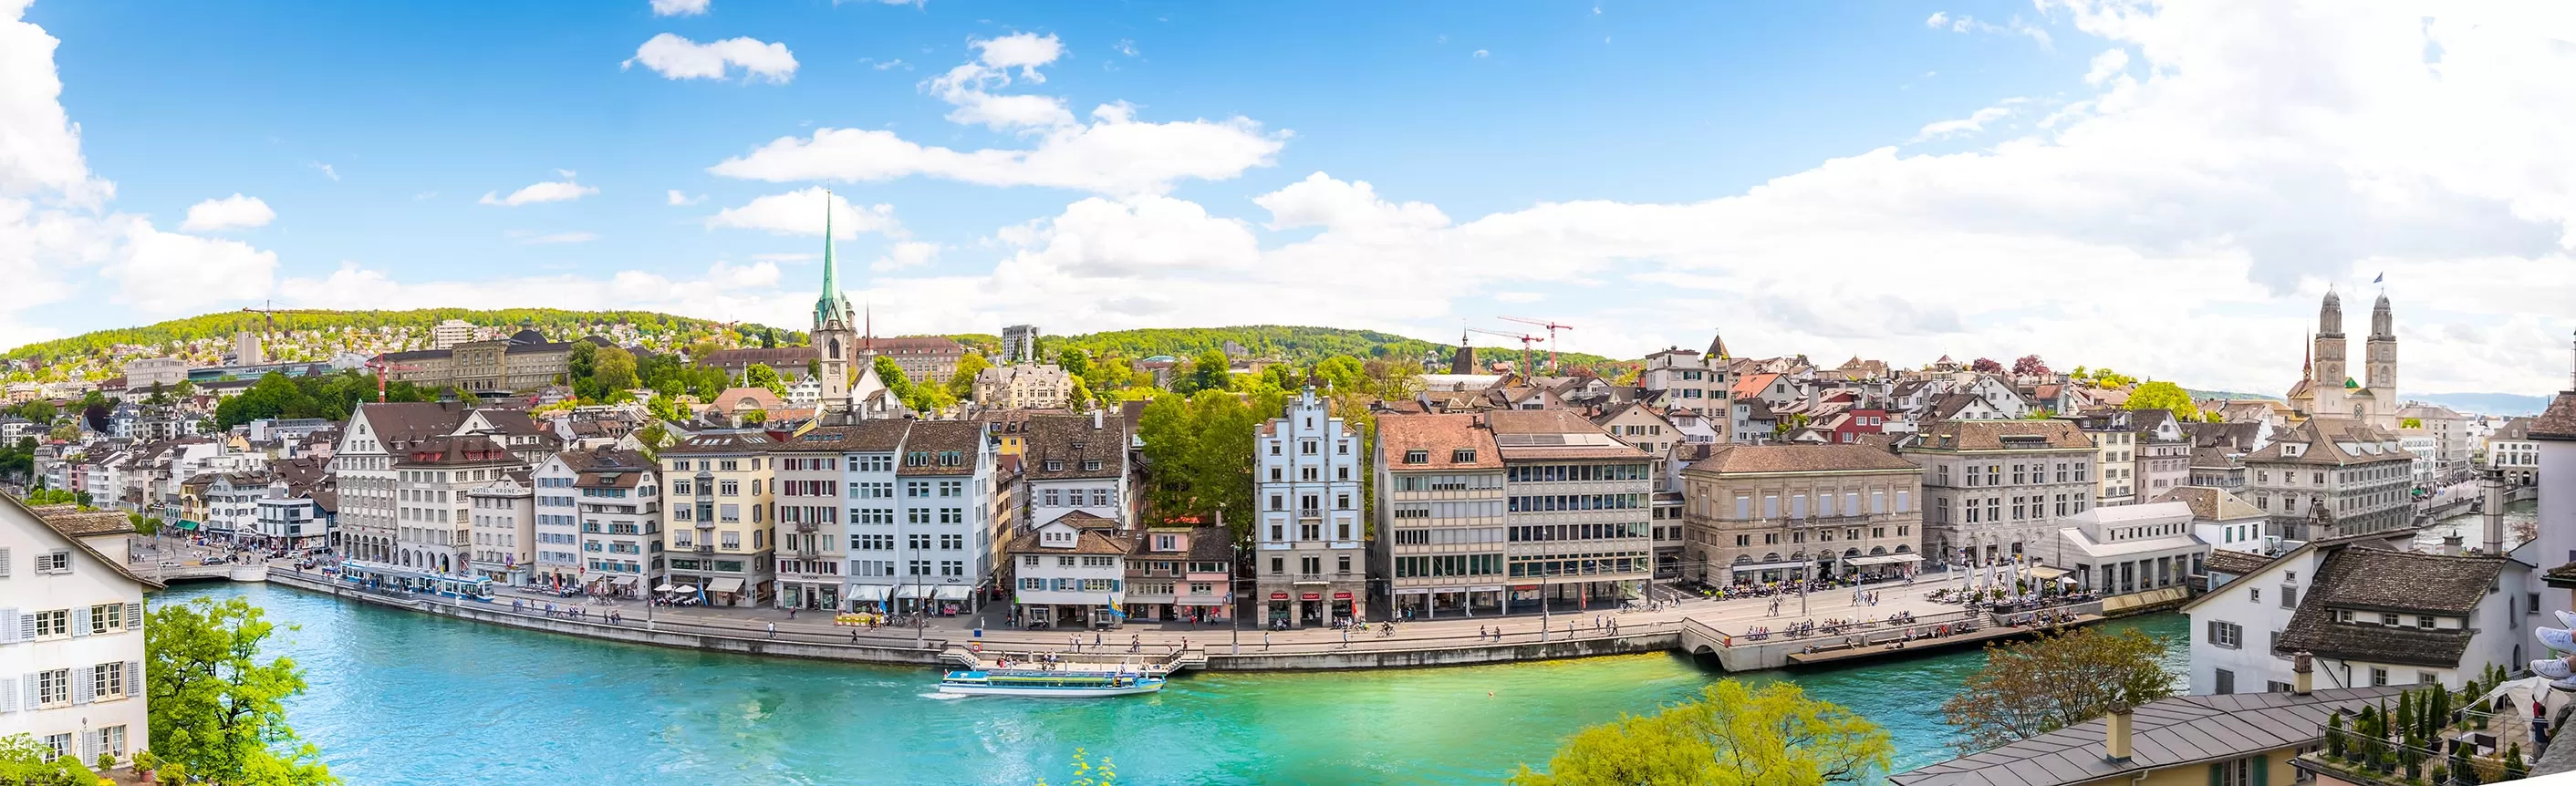 Zurich itinerary - Things to do in Zurich - Lindenhof Panorama